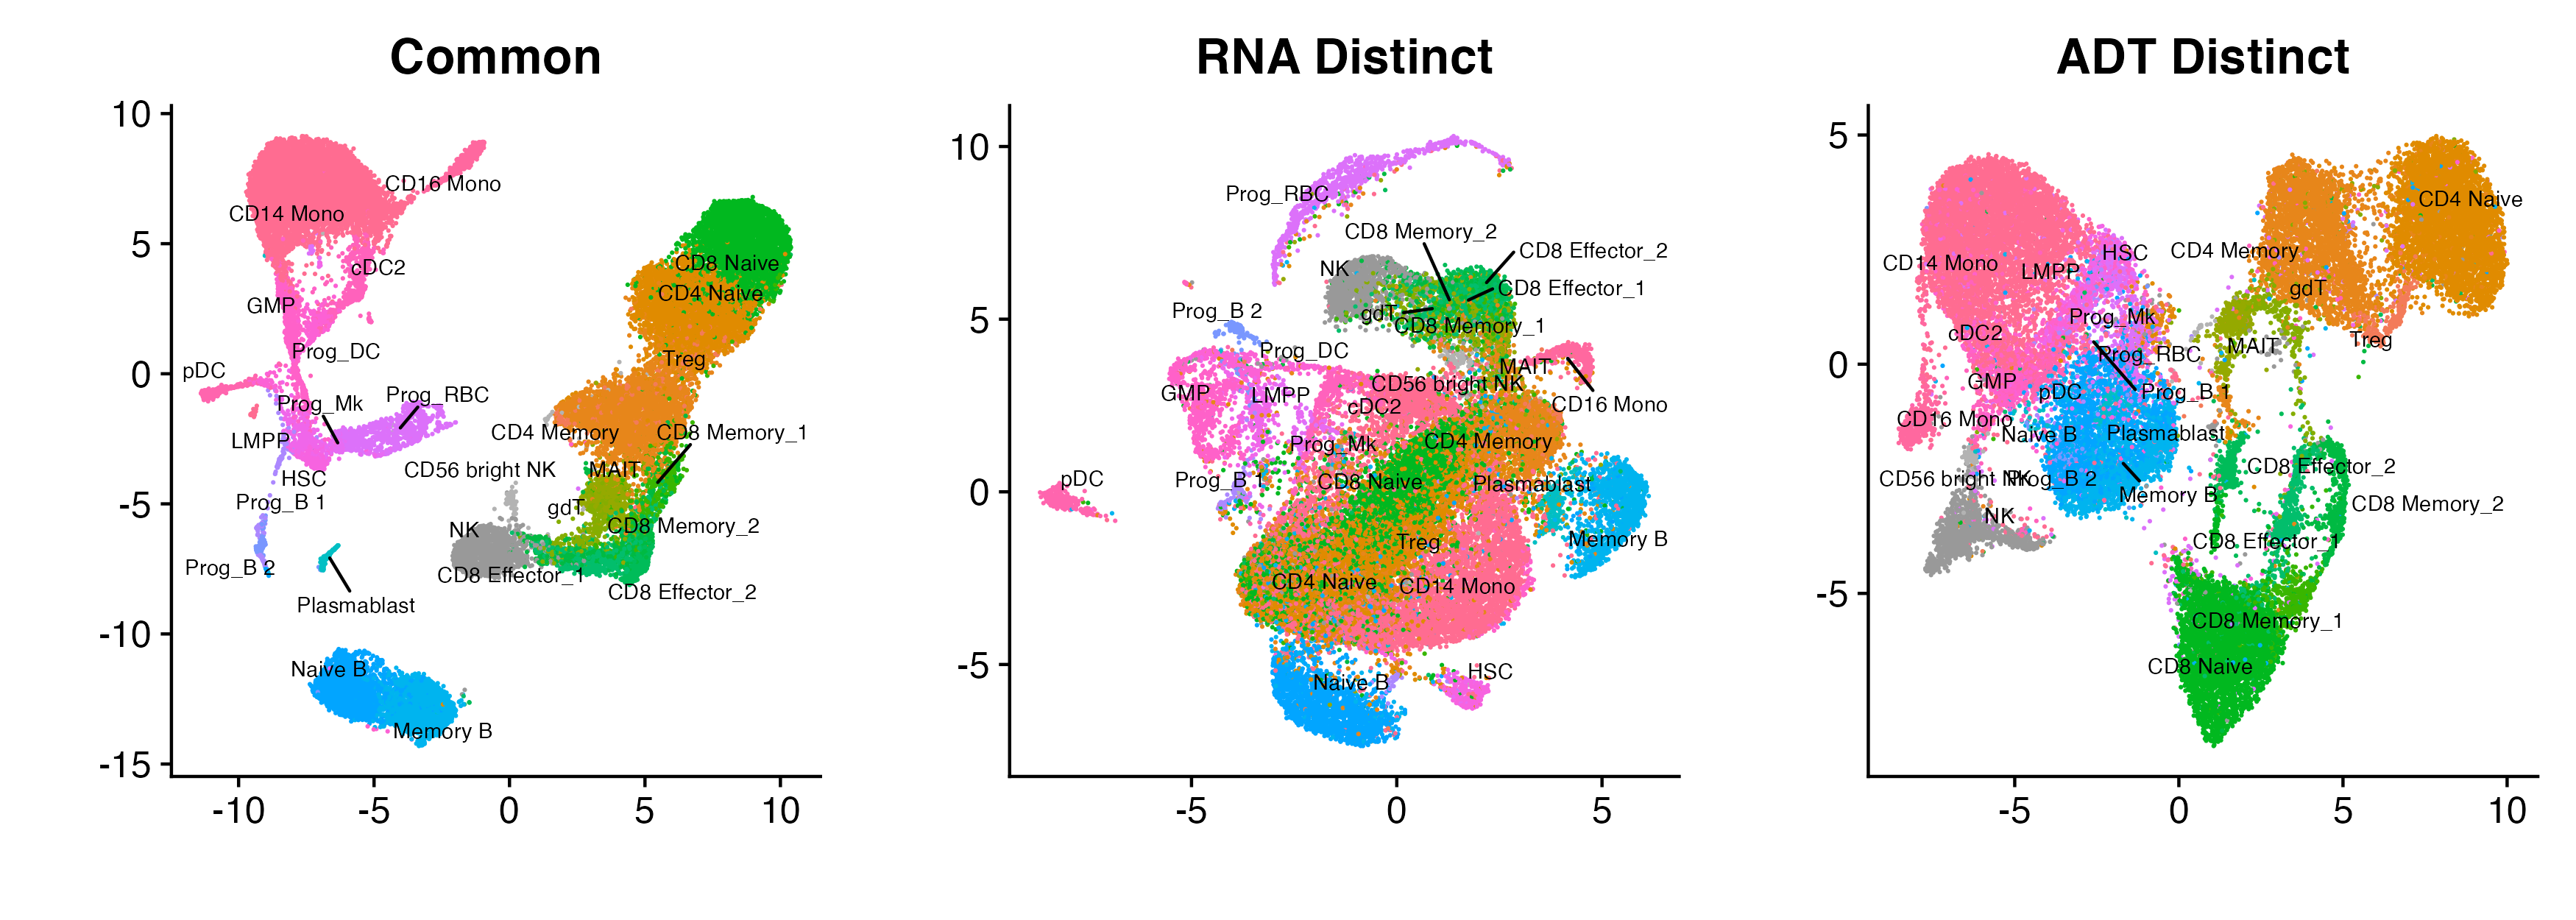 Common, RNA distinct, and ADT distinct embeddings